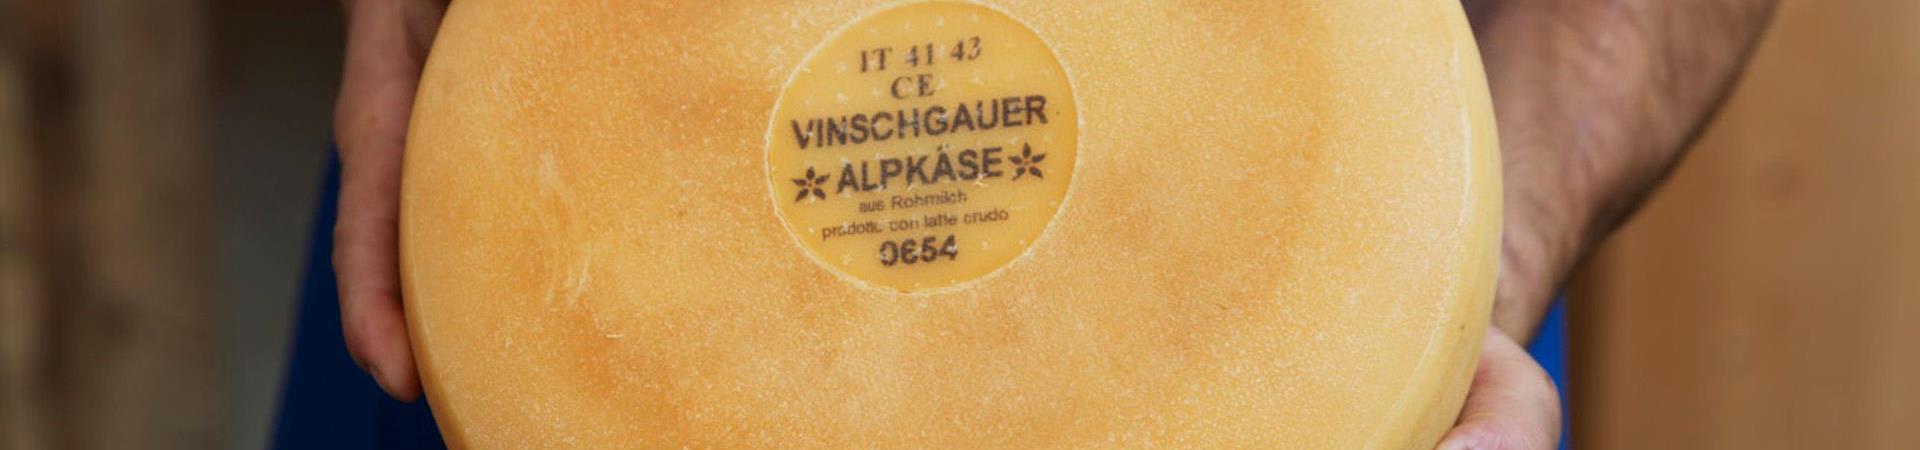 rev-header-almkaese-vinschgau-marketing-by-frieder-blickle-2